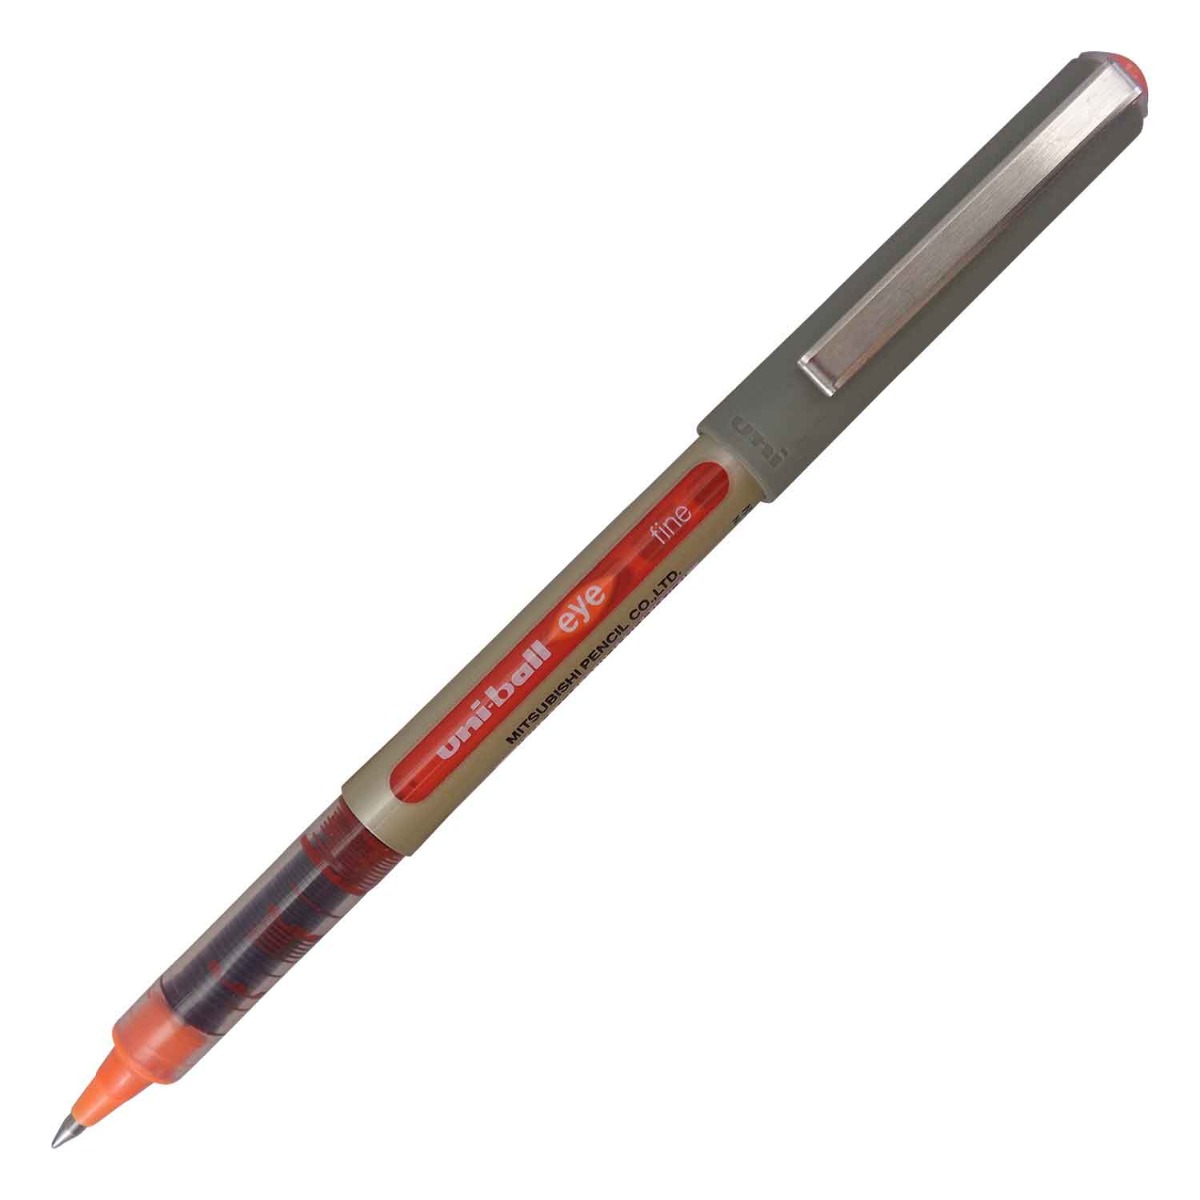 UniBall Eye UB 157 Model:15793 Grey Color Body With Orange Writing Gel Pen